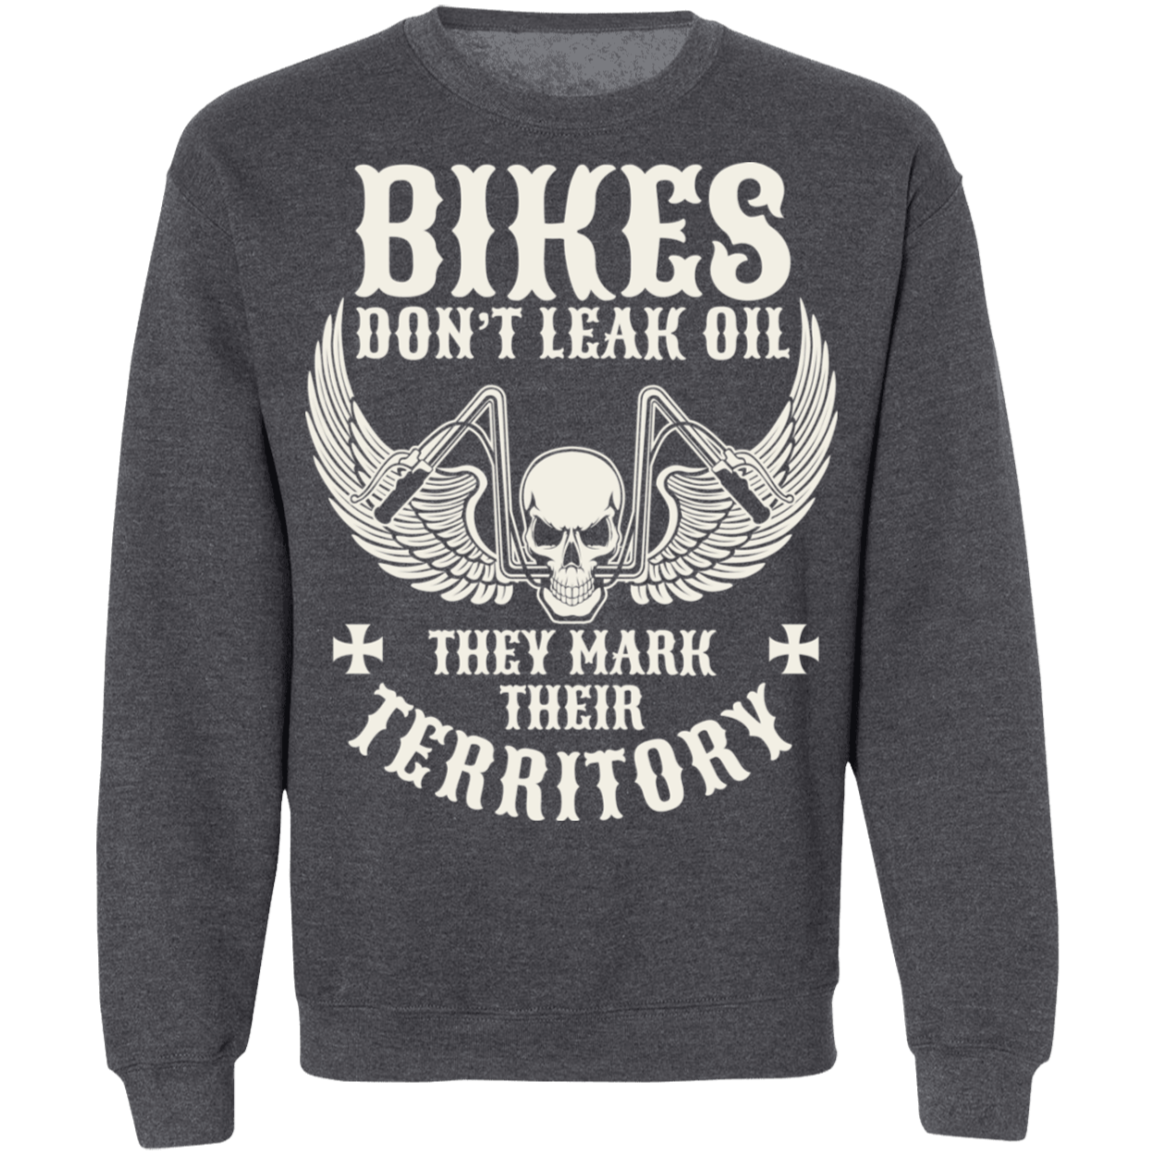 Bikes don’t leak oil, they mark their territory Shirt